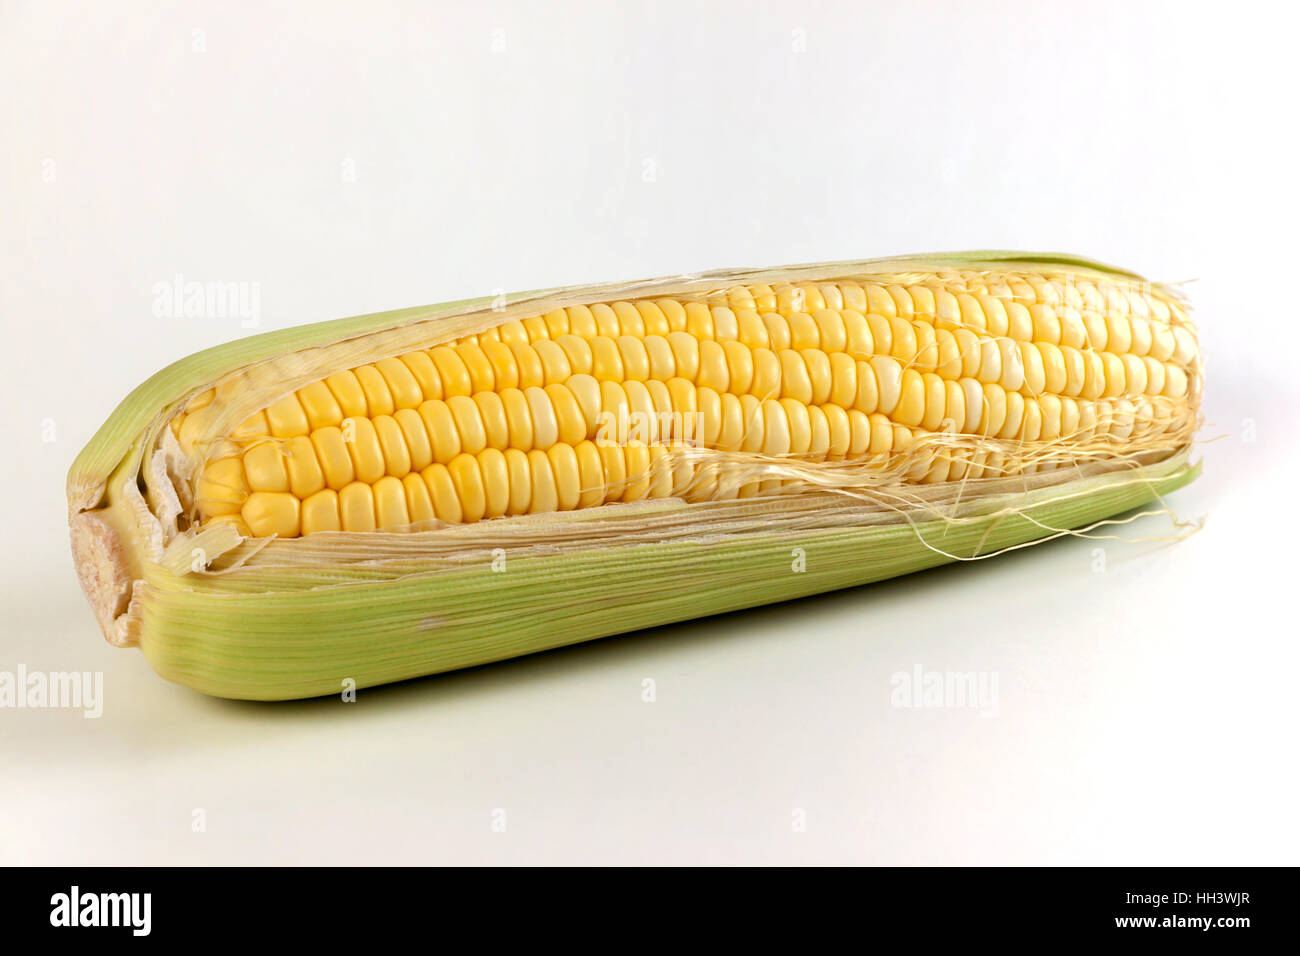 Boil sweet corn on cobs kernels or fresh grains of ripe corn on white background Stock Photo